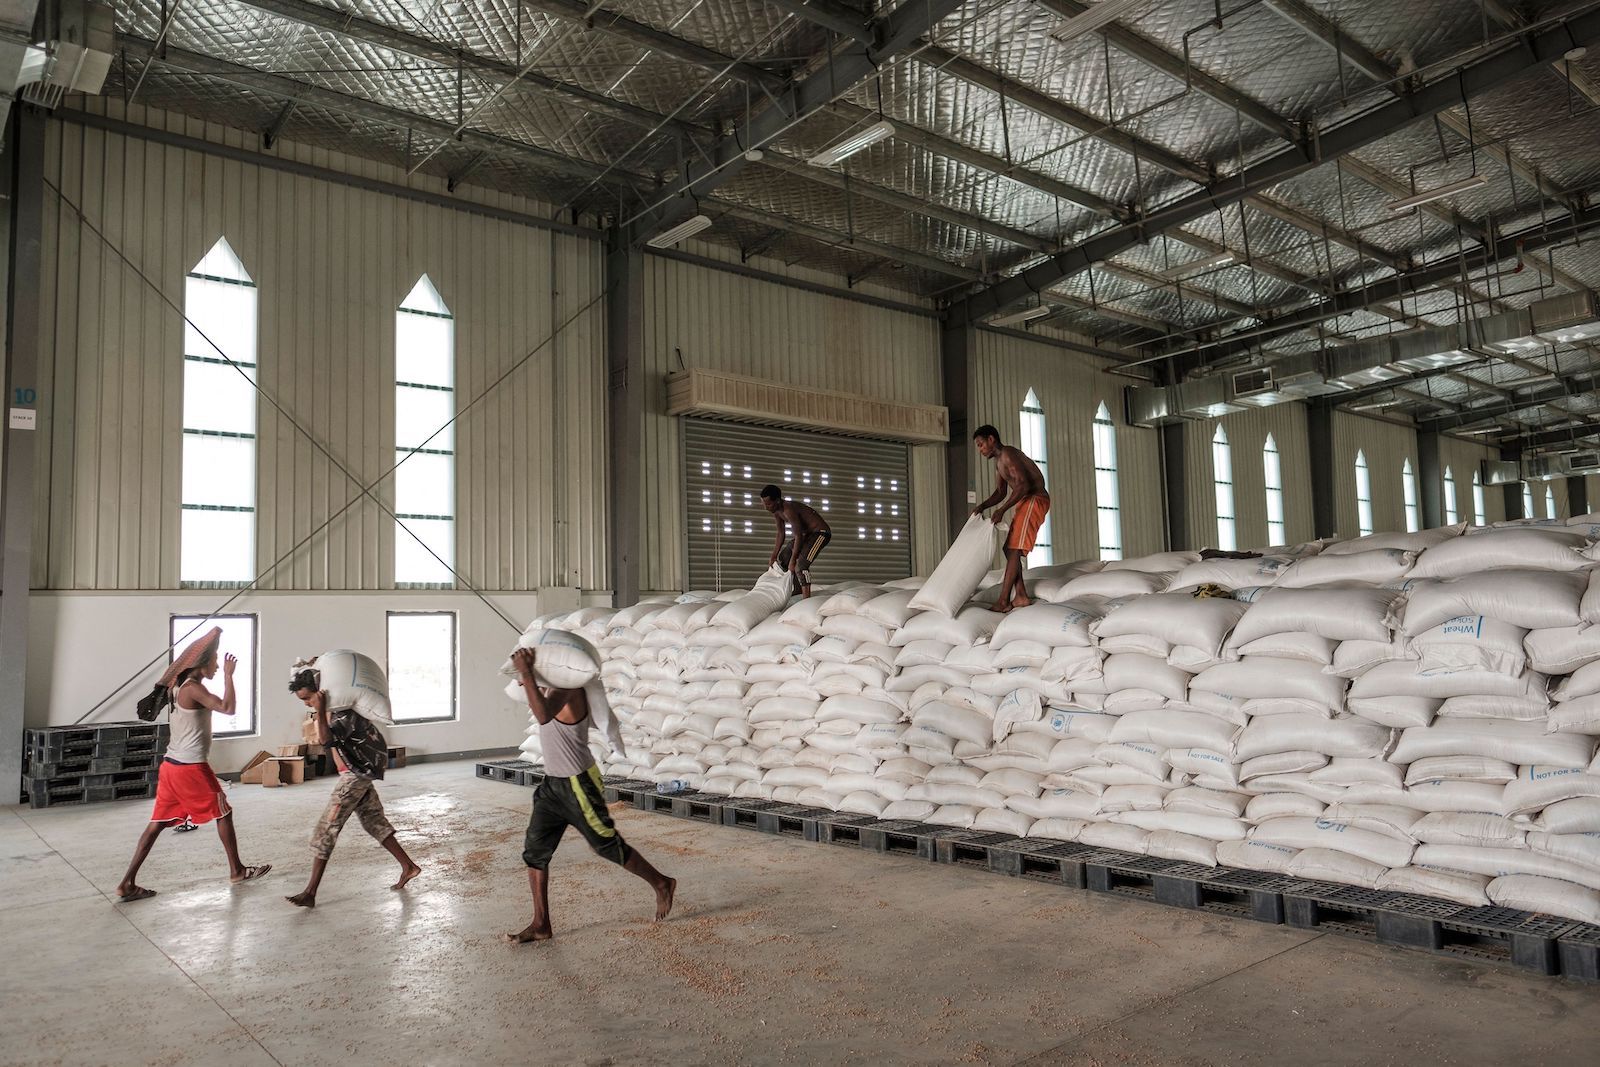 Men carry sacks of food at a warehouse